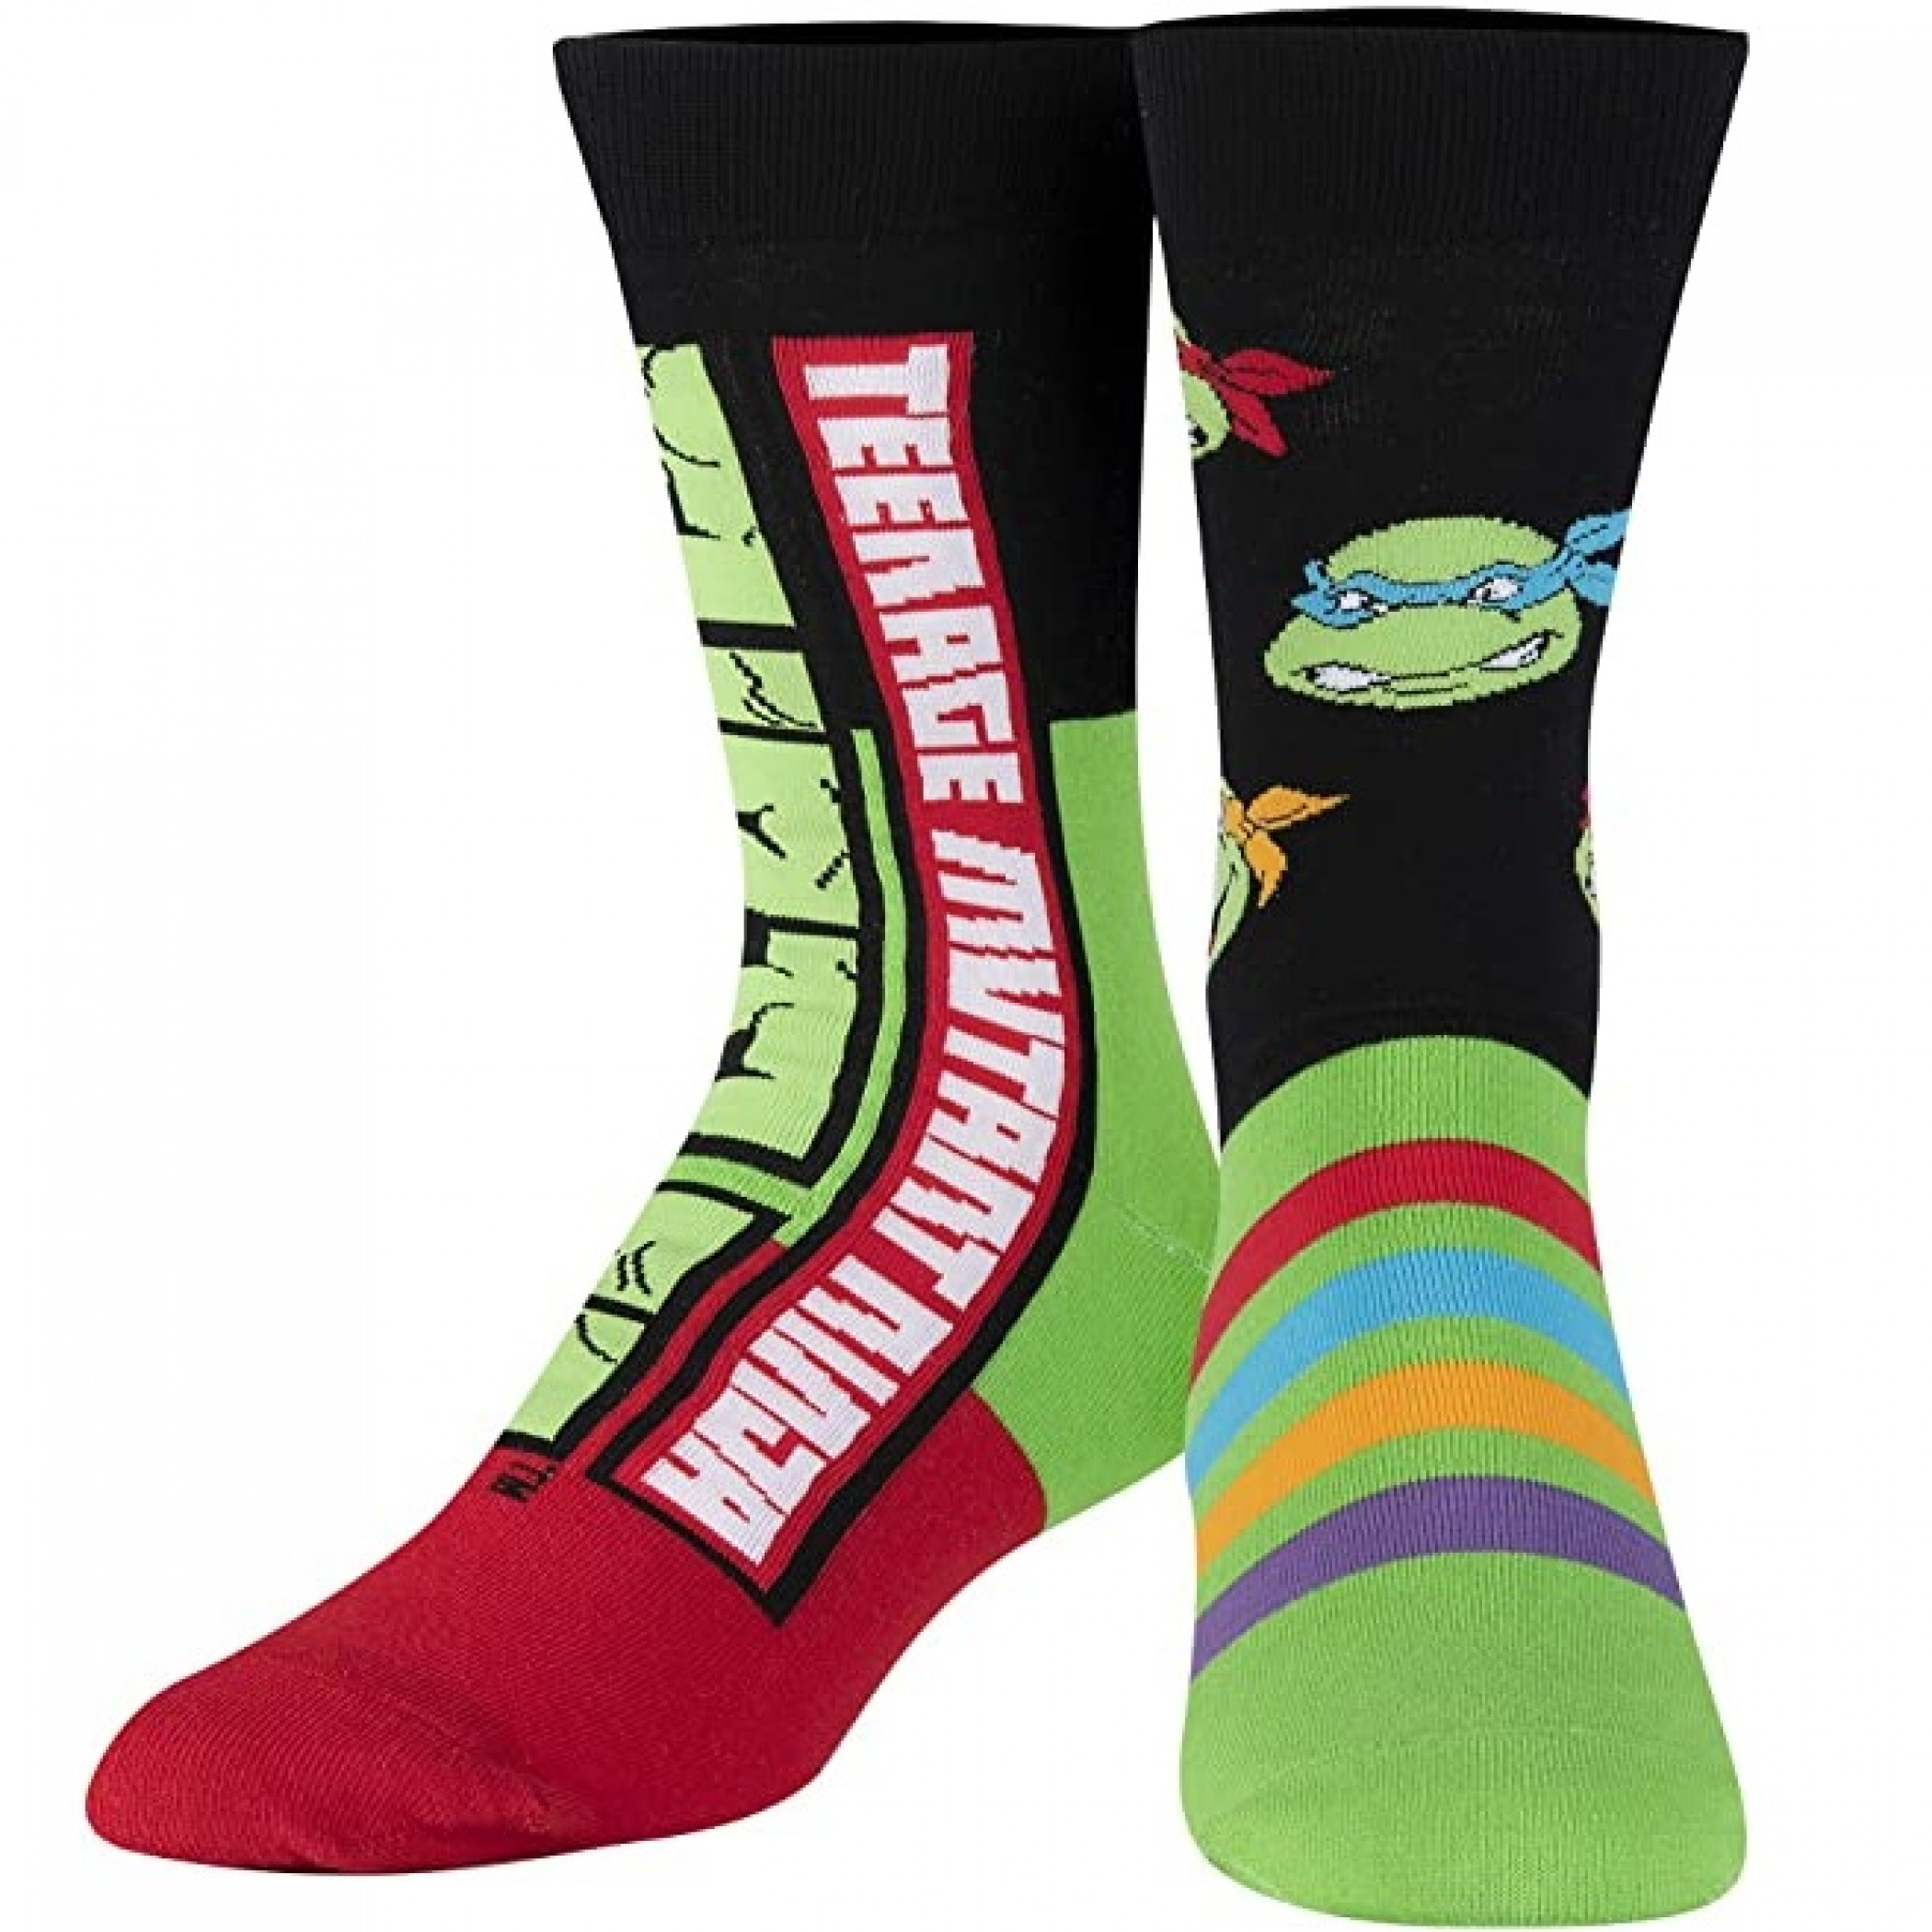 Teenage Mutant Ninja Turtles Colors and Characters Crew Socks